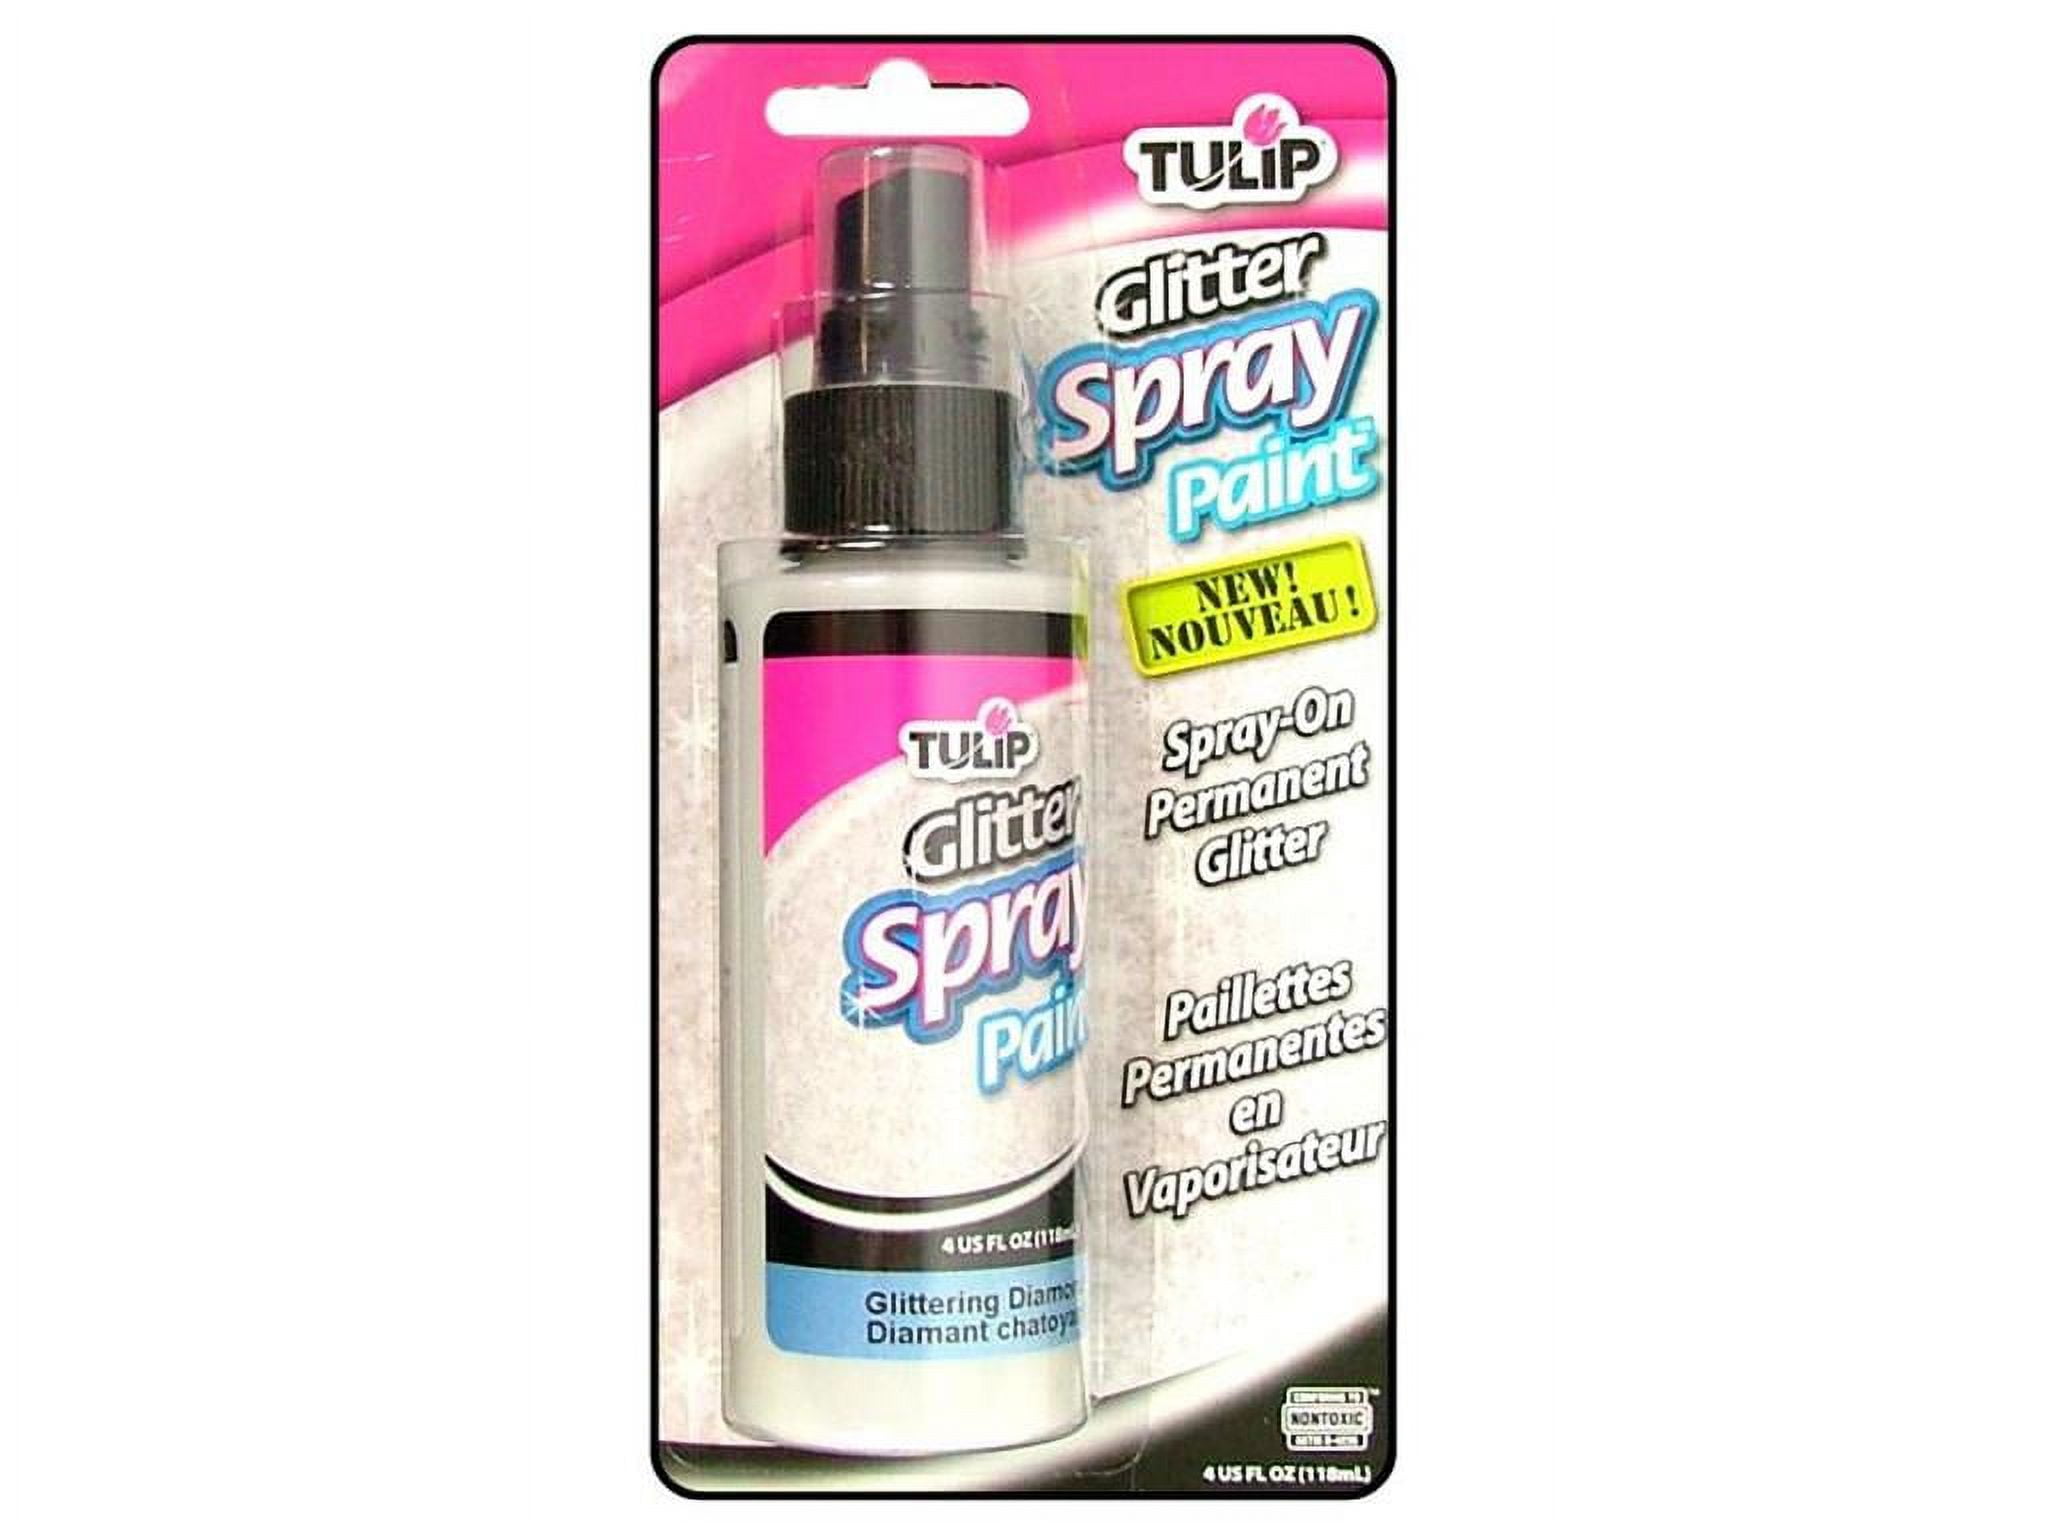 TULIP Fabric Spray 26568 SOP 4Oz Asphalt, 4 Fl Oz (Pack of 1), As Detailed